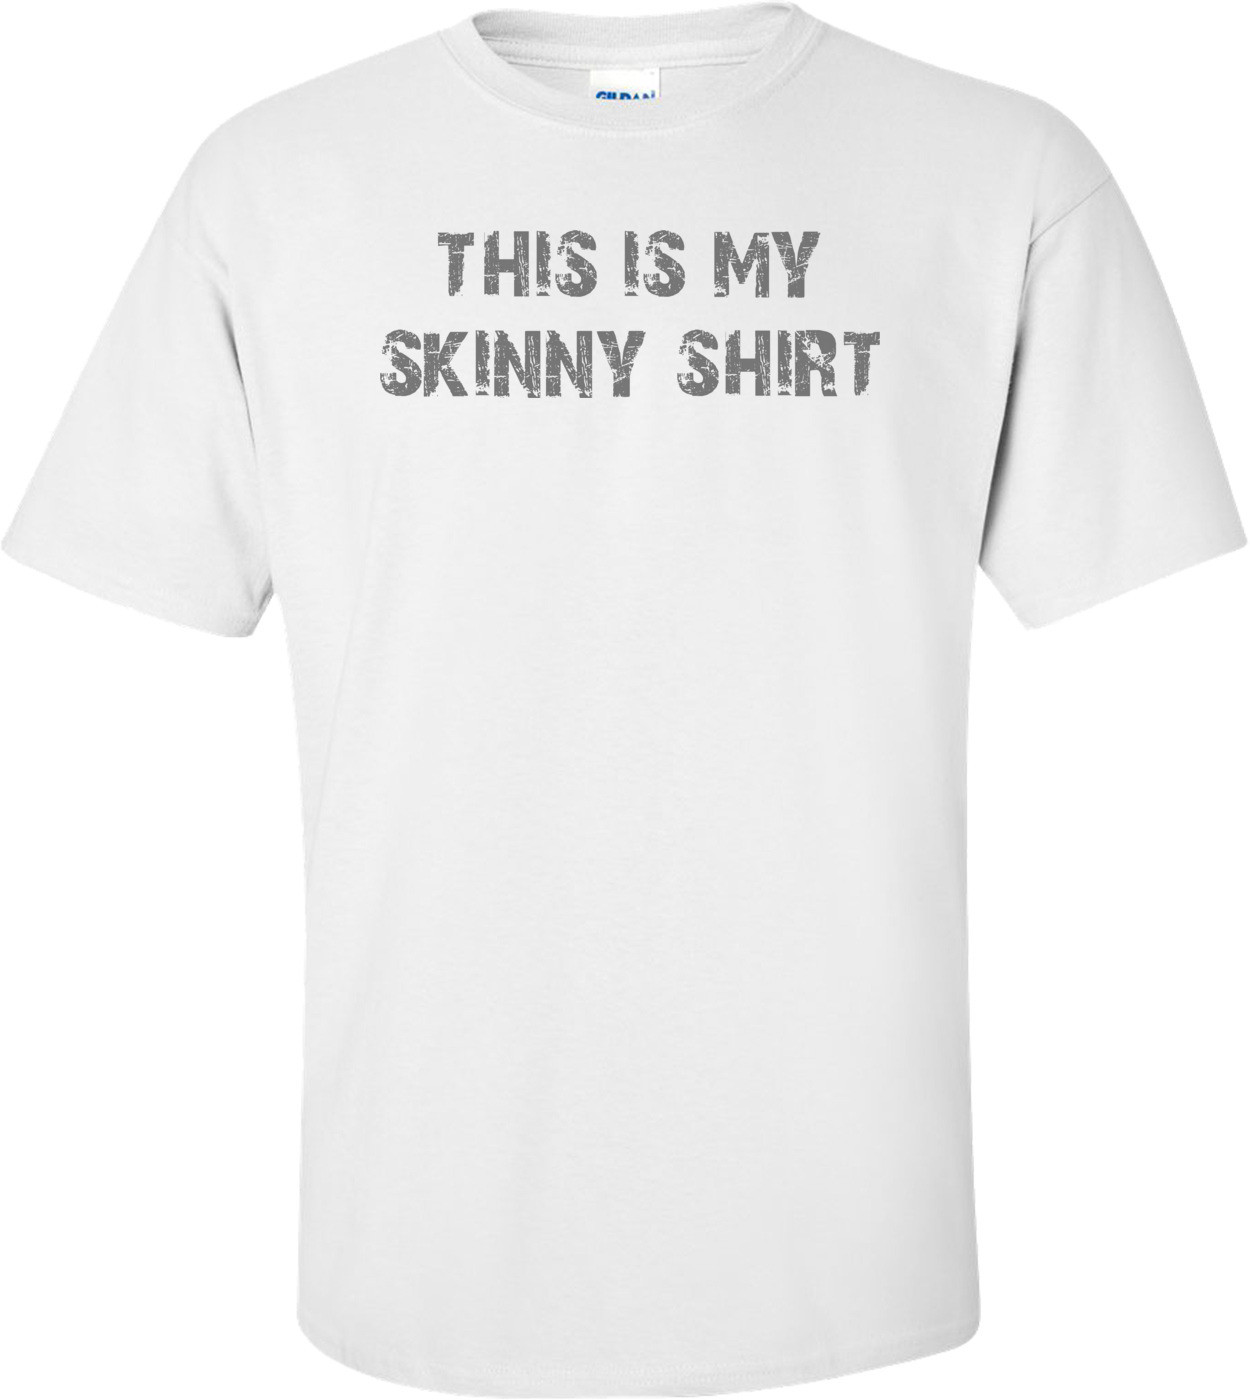 this is my skinny shirt Shirt